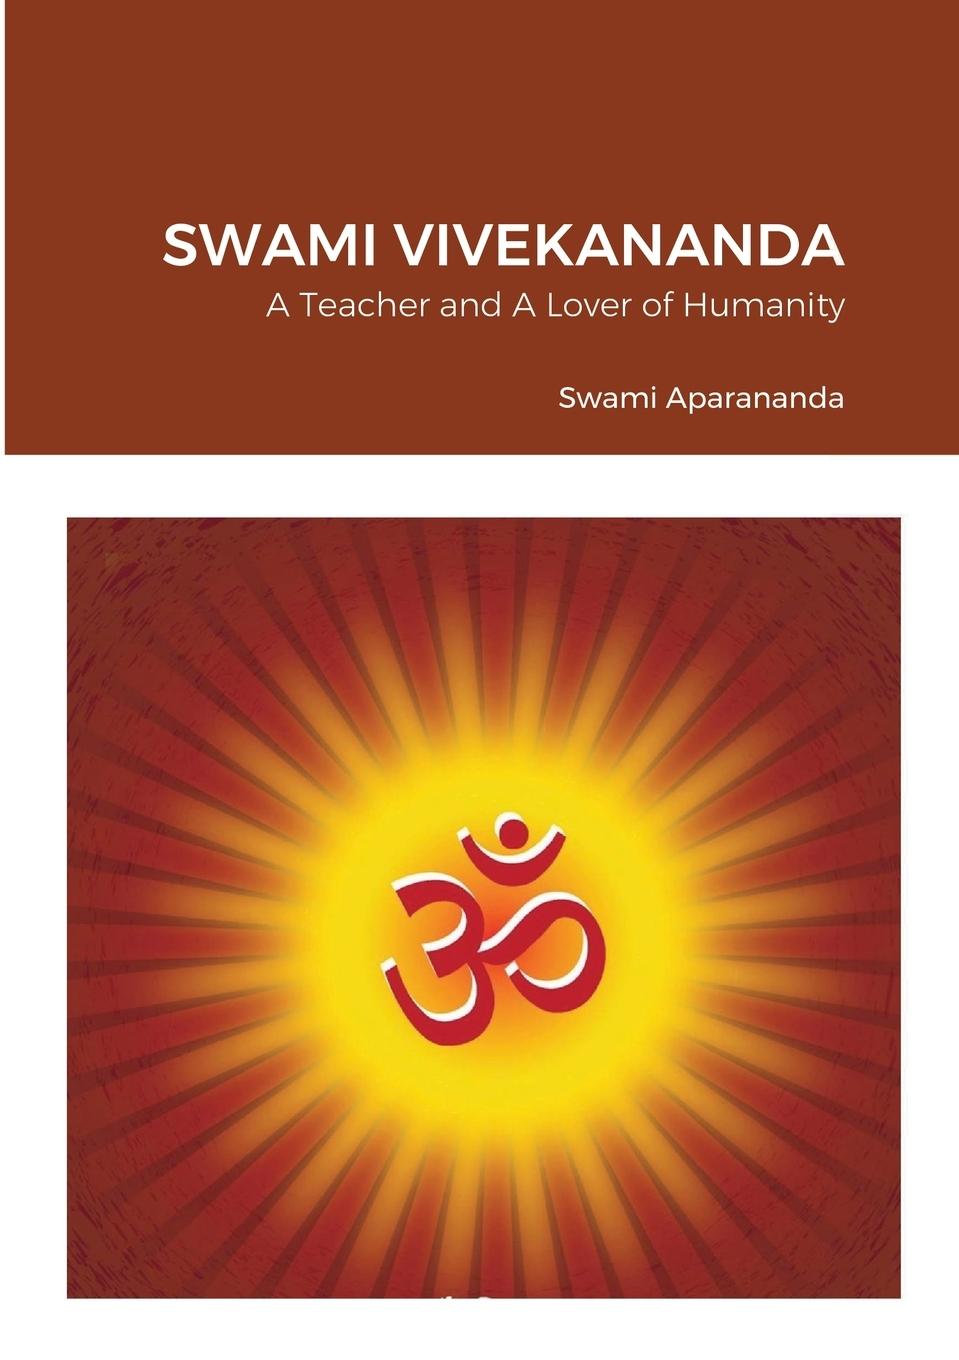 Carte Swami Vivekananda 